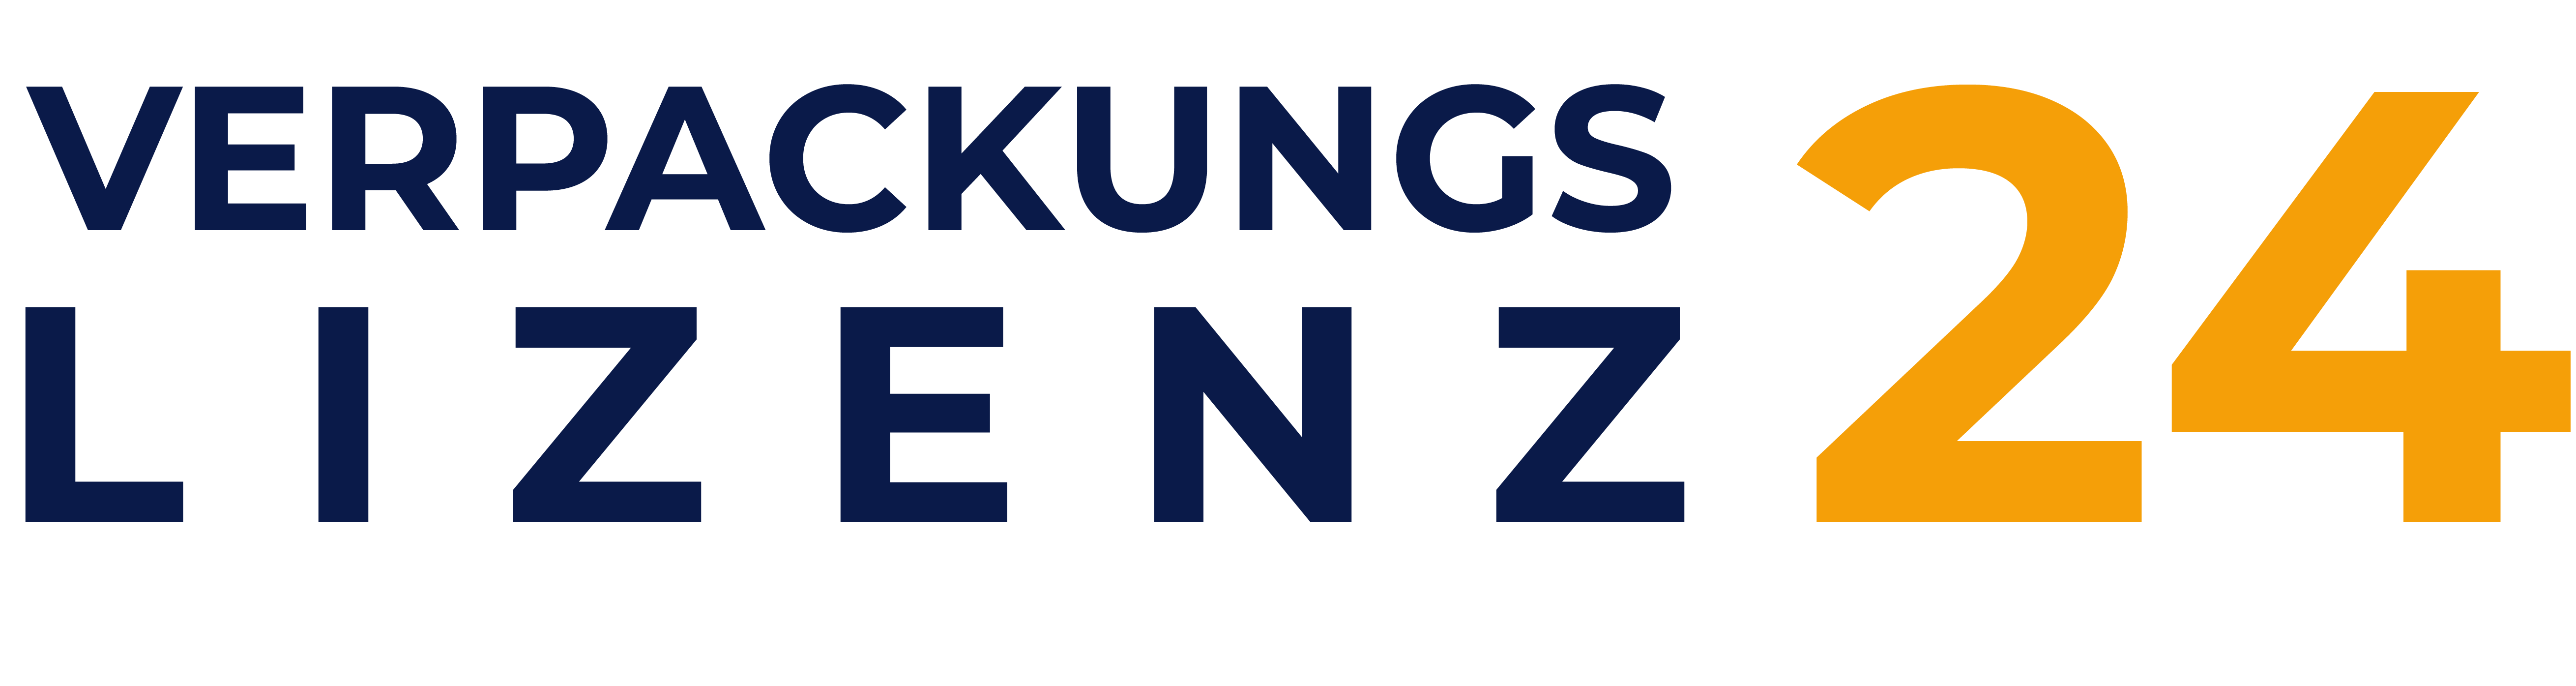 Verpackungslizenz24 Logo Farbe